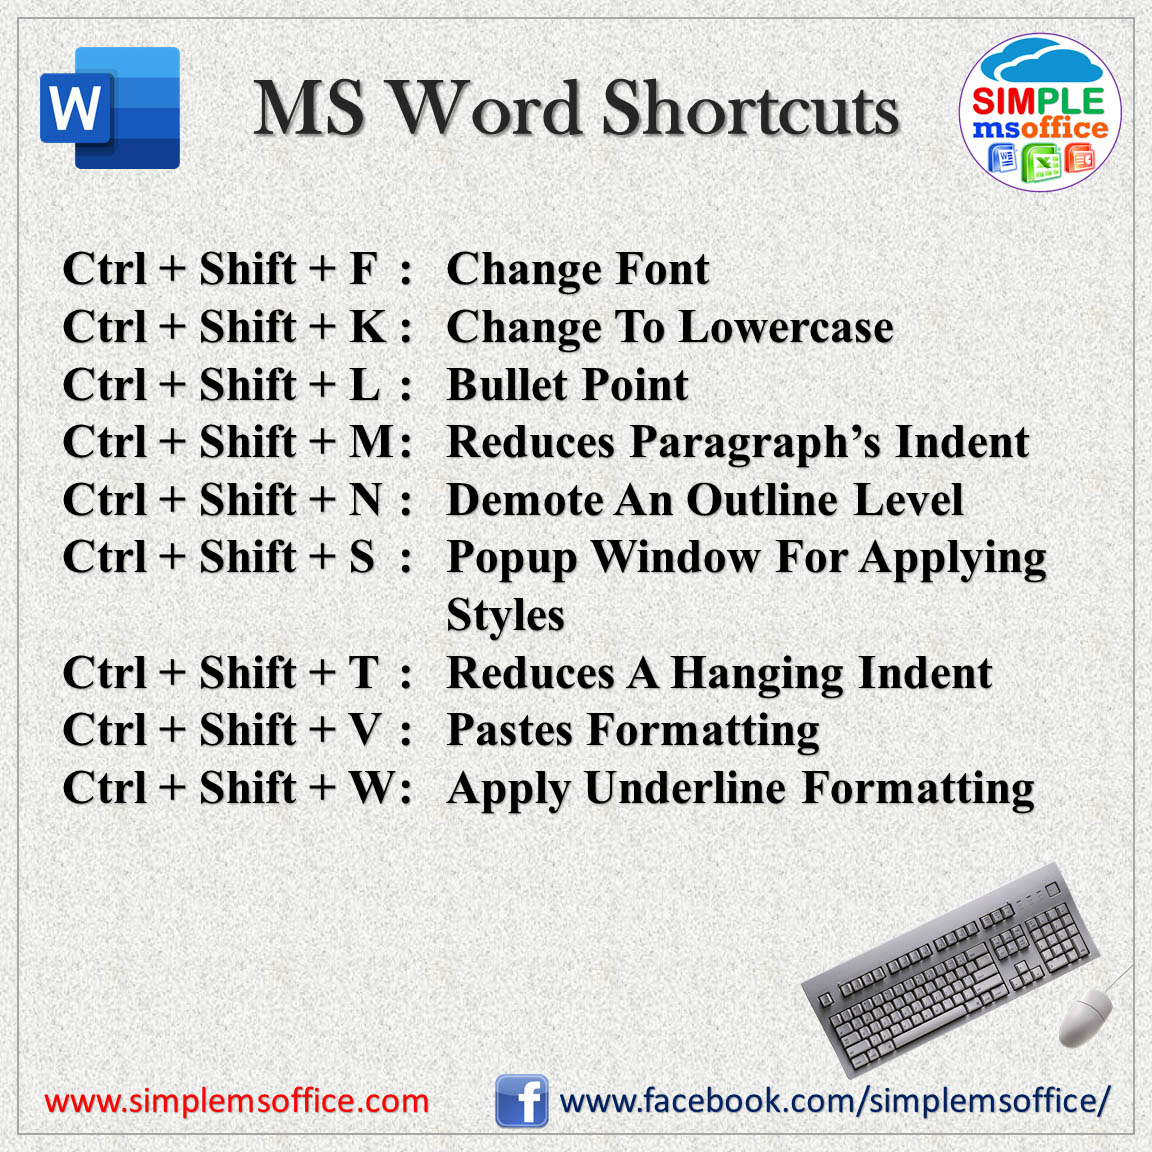 ms-word-shortcuts-13-simplemsoffice